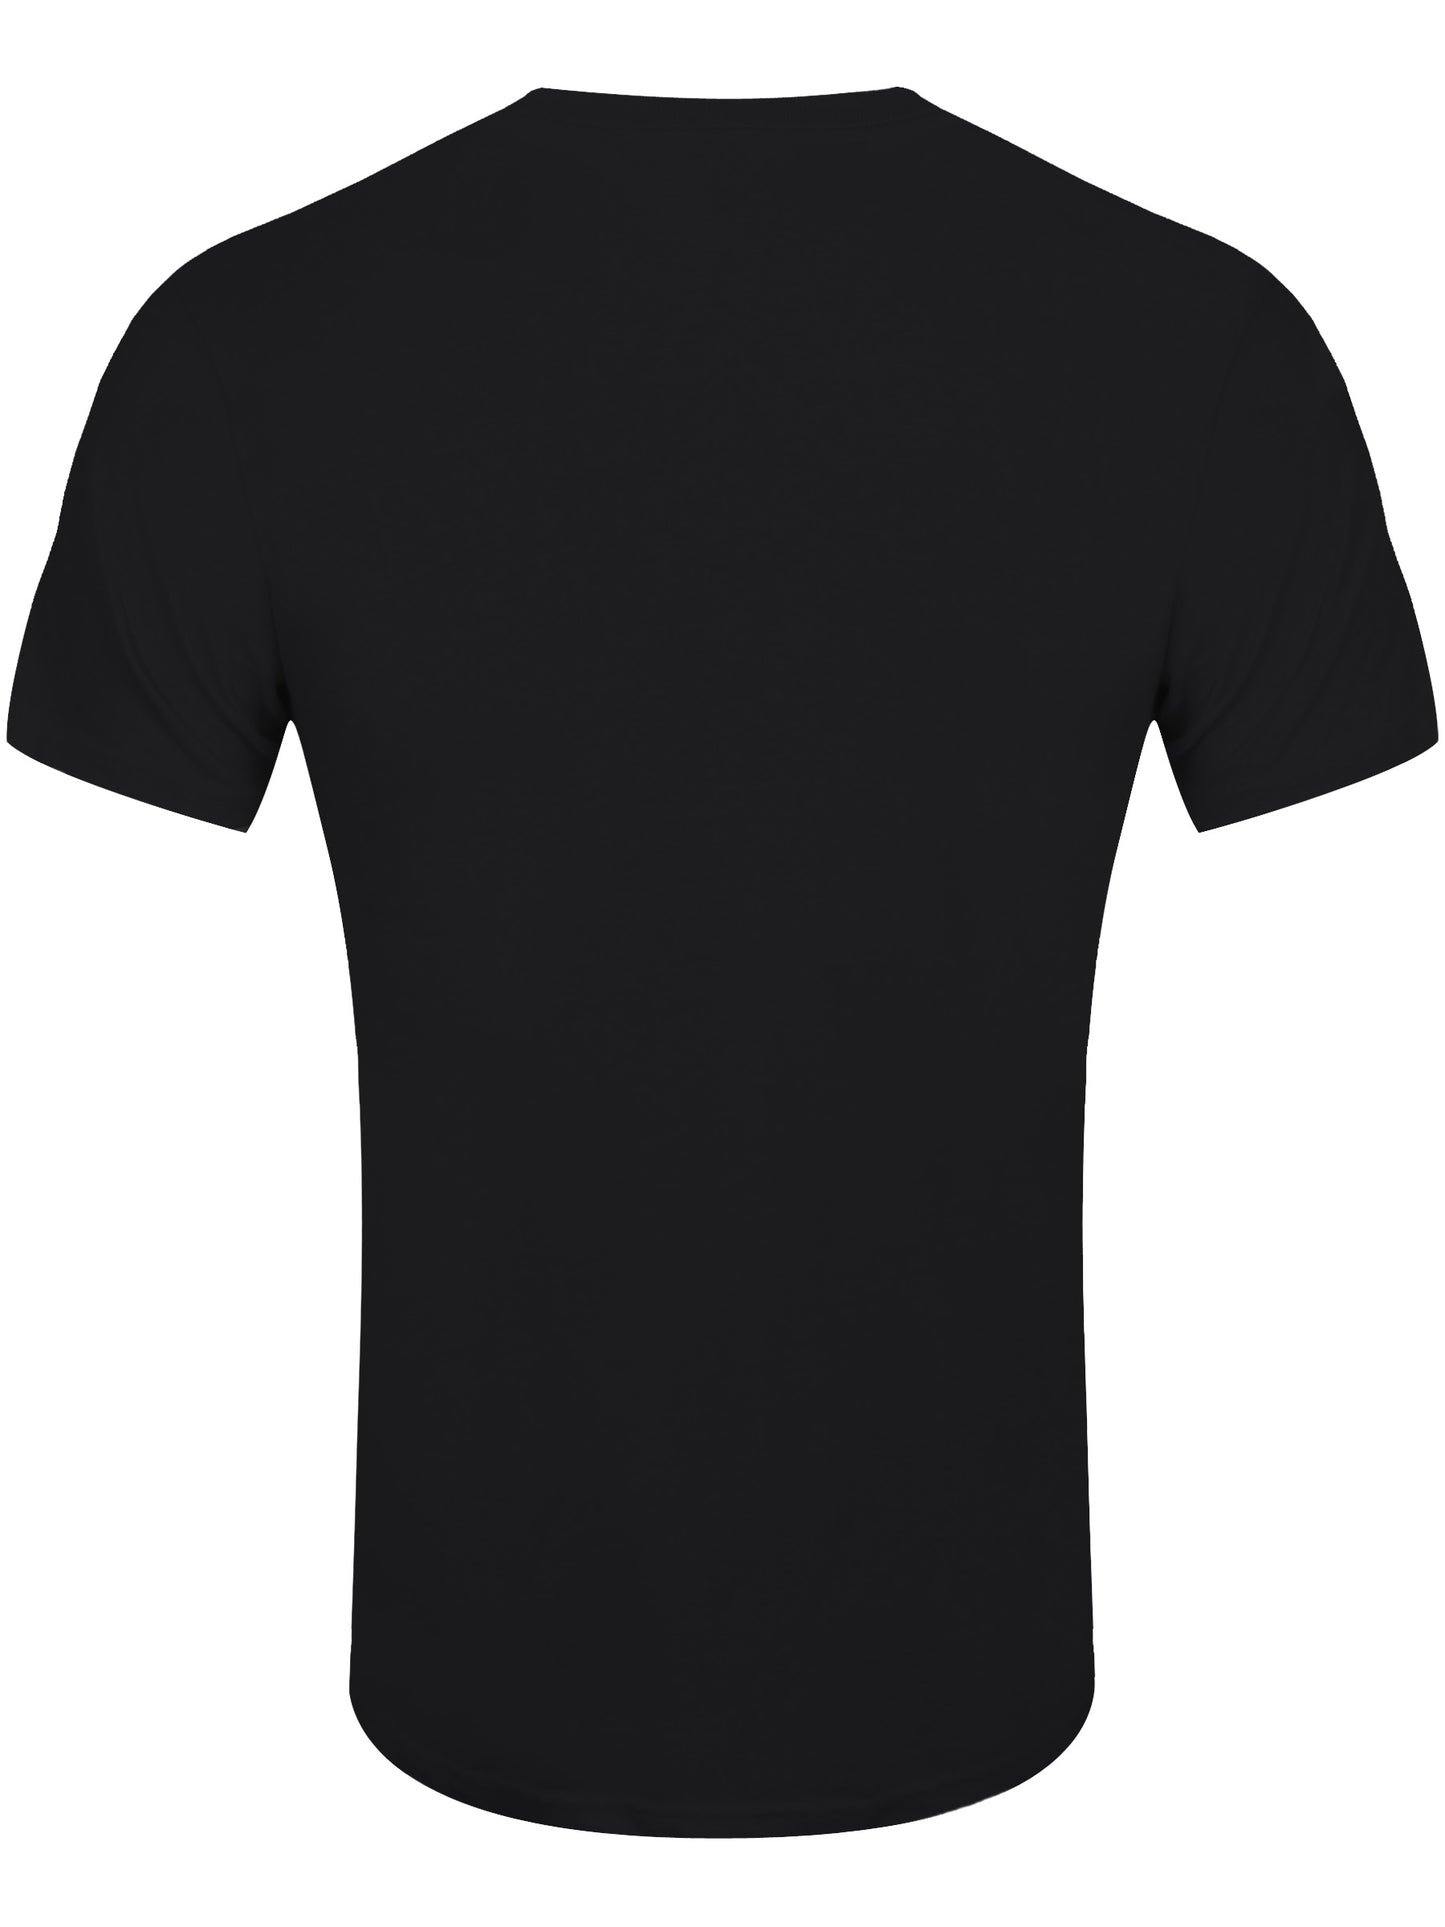 Rolo Tomassi Portal Men's Black T-Shirt